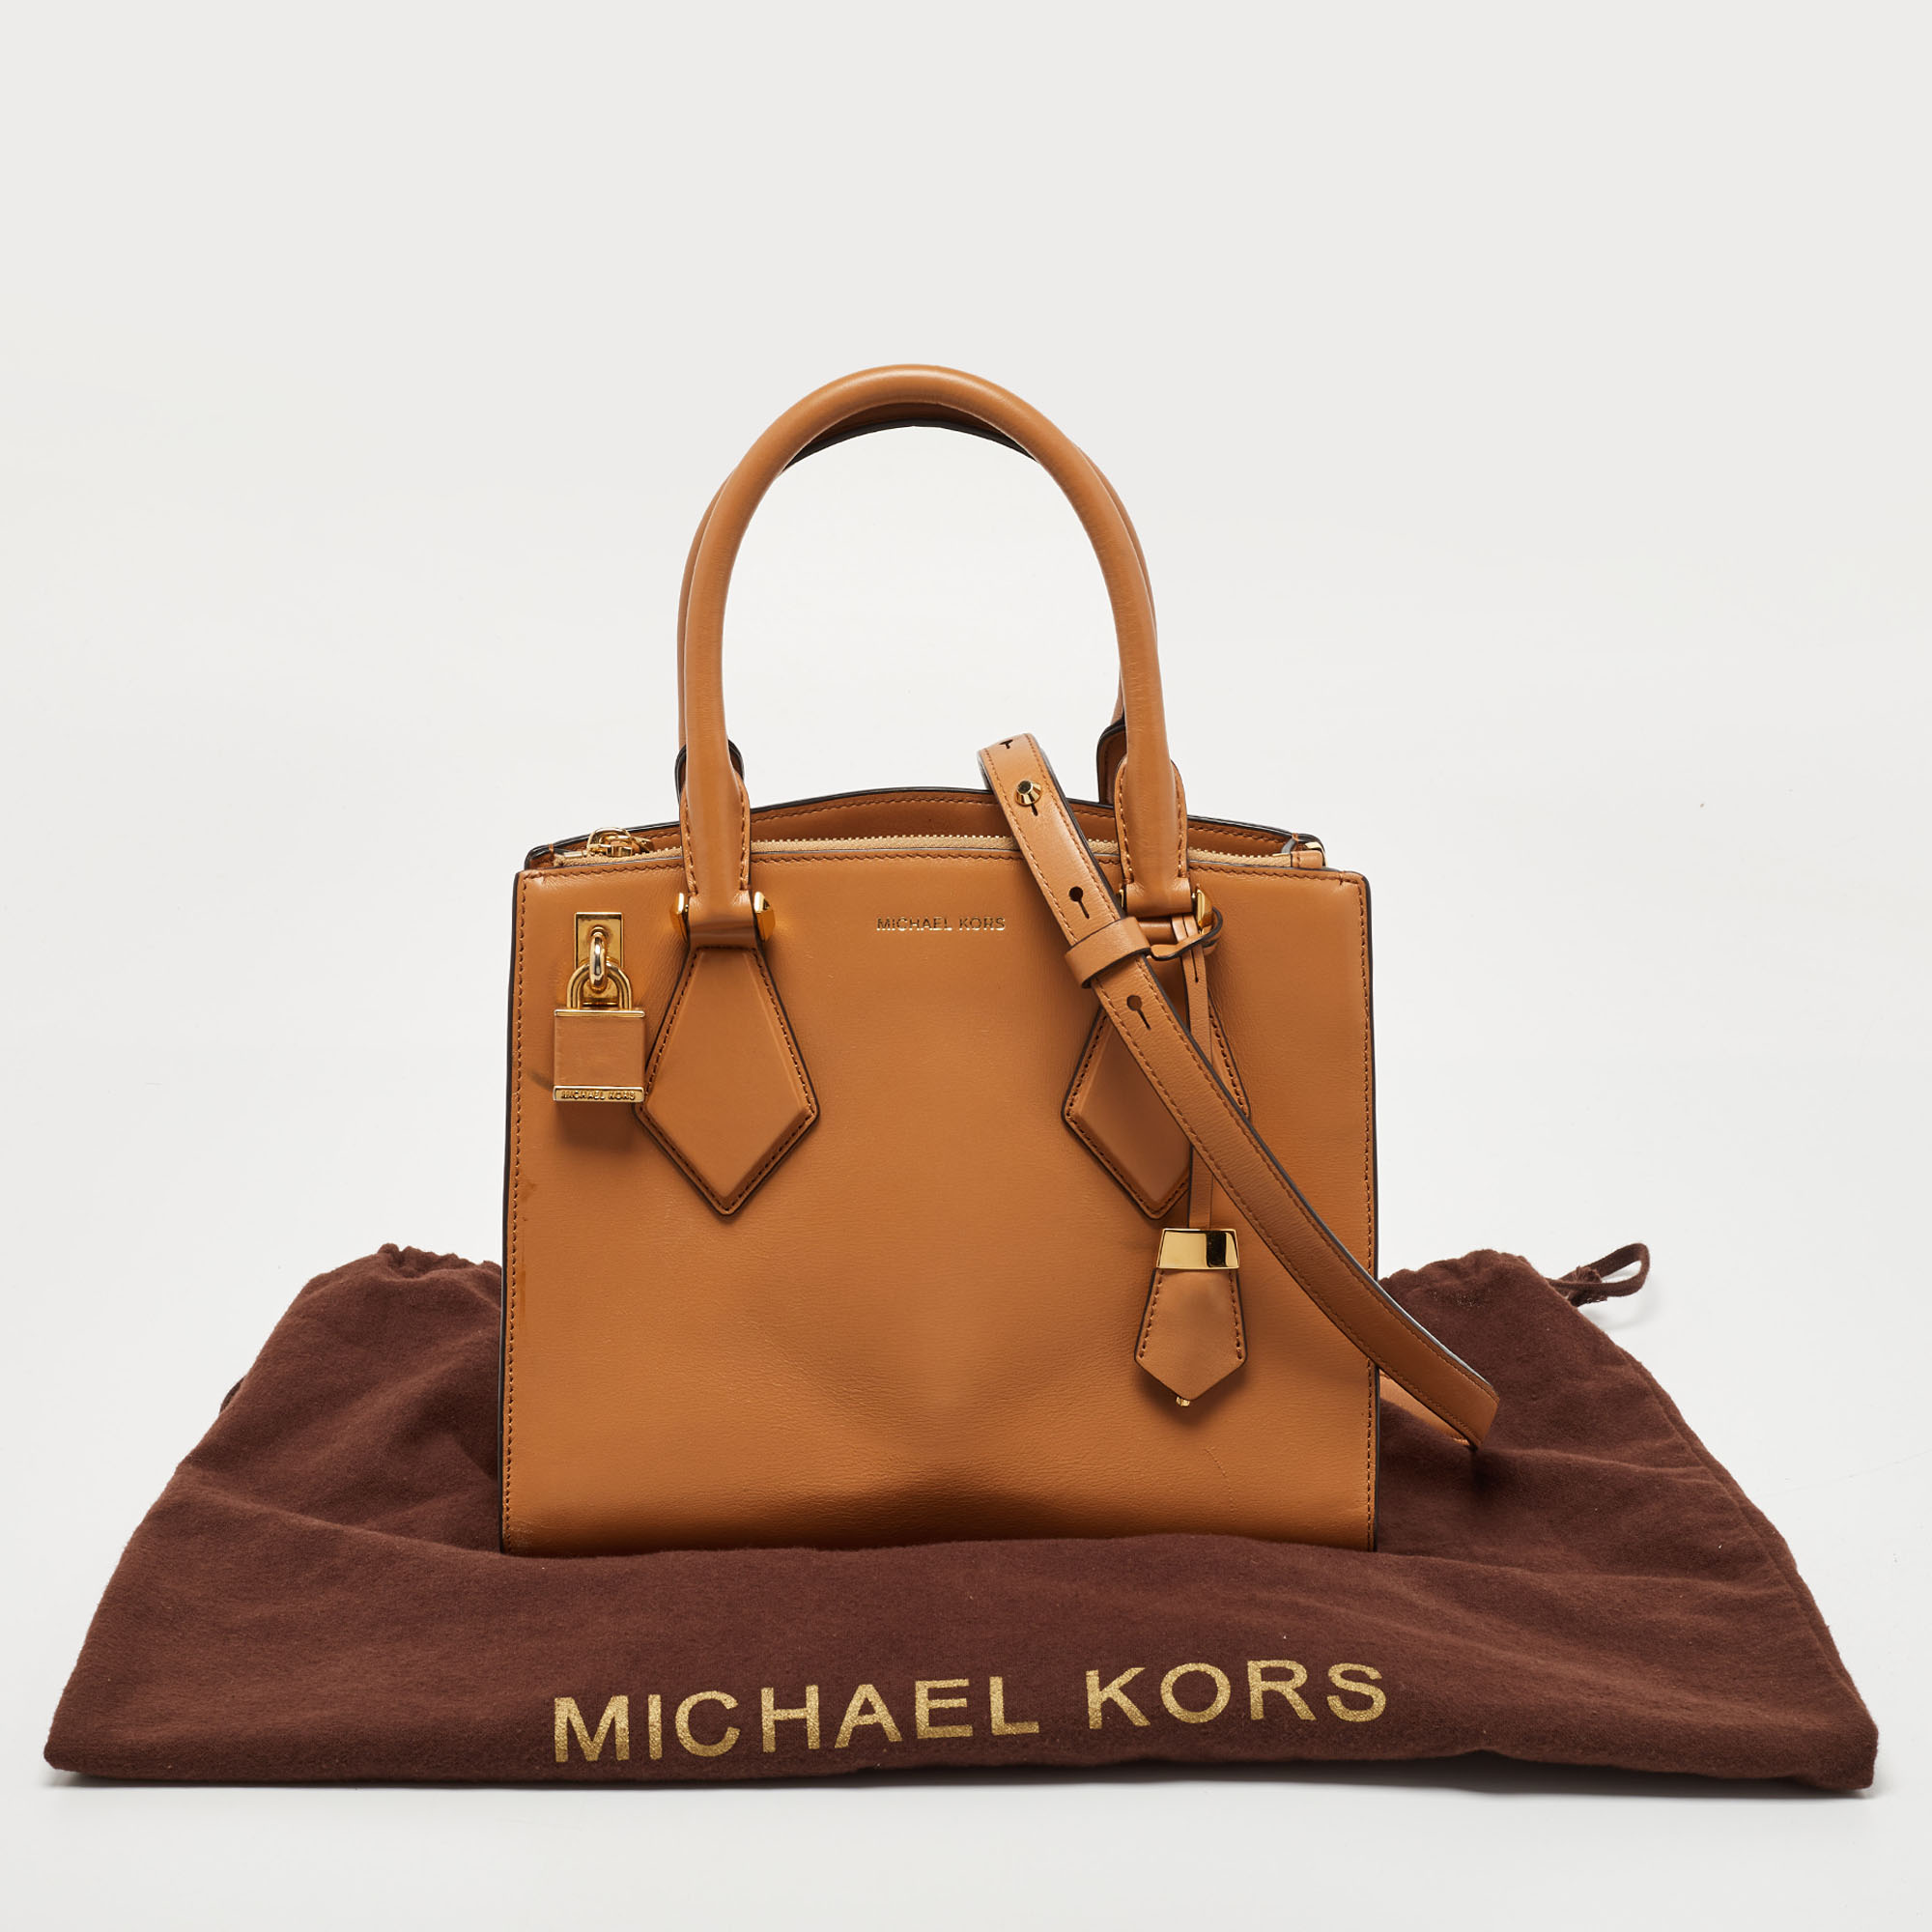 Michael Kors Mel Medium Saffiano Leather Tote Bag in Natural